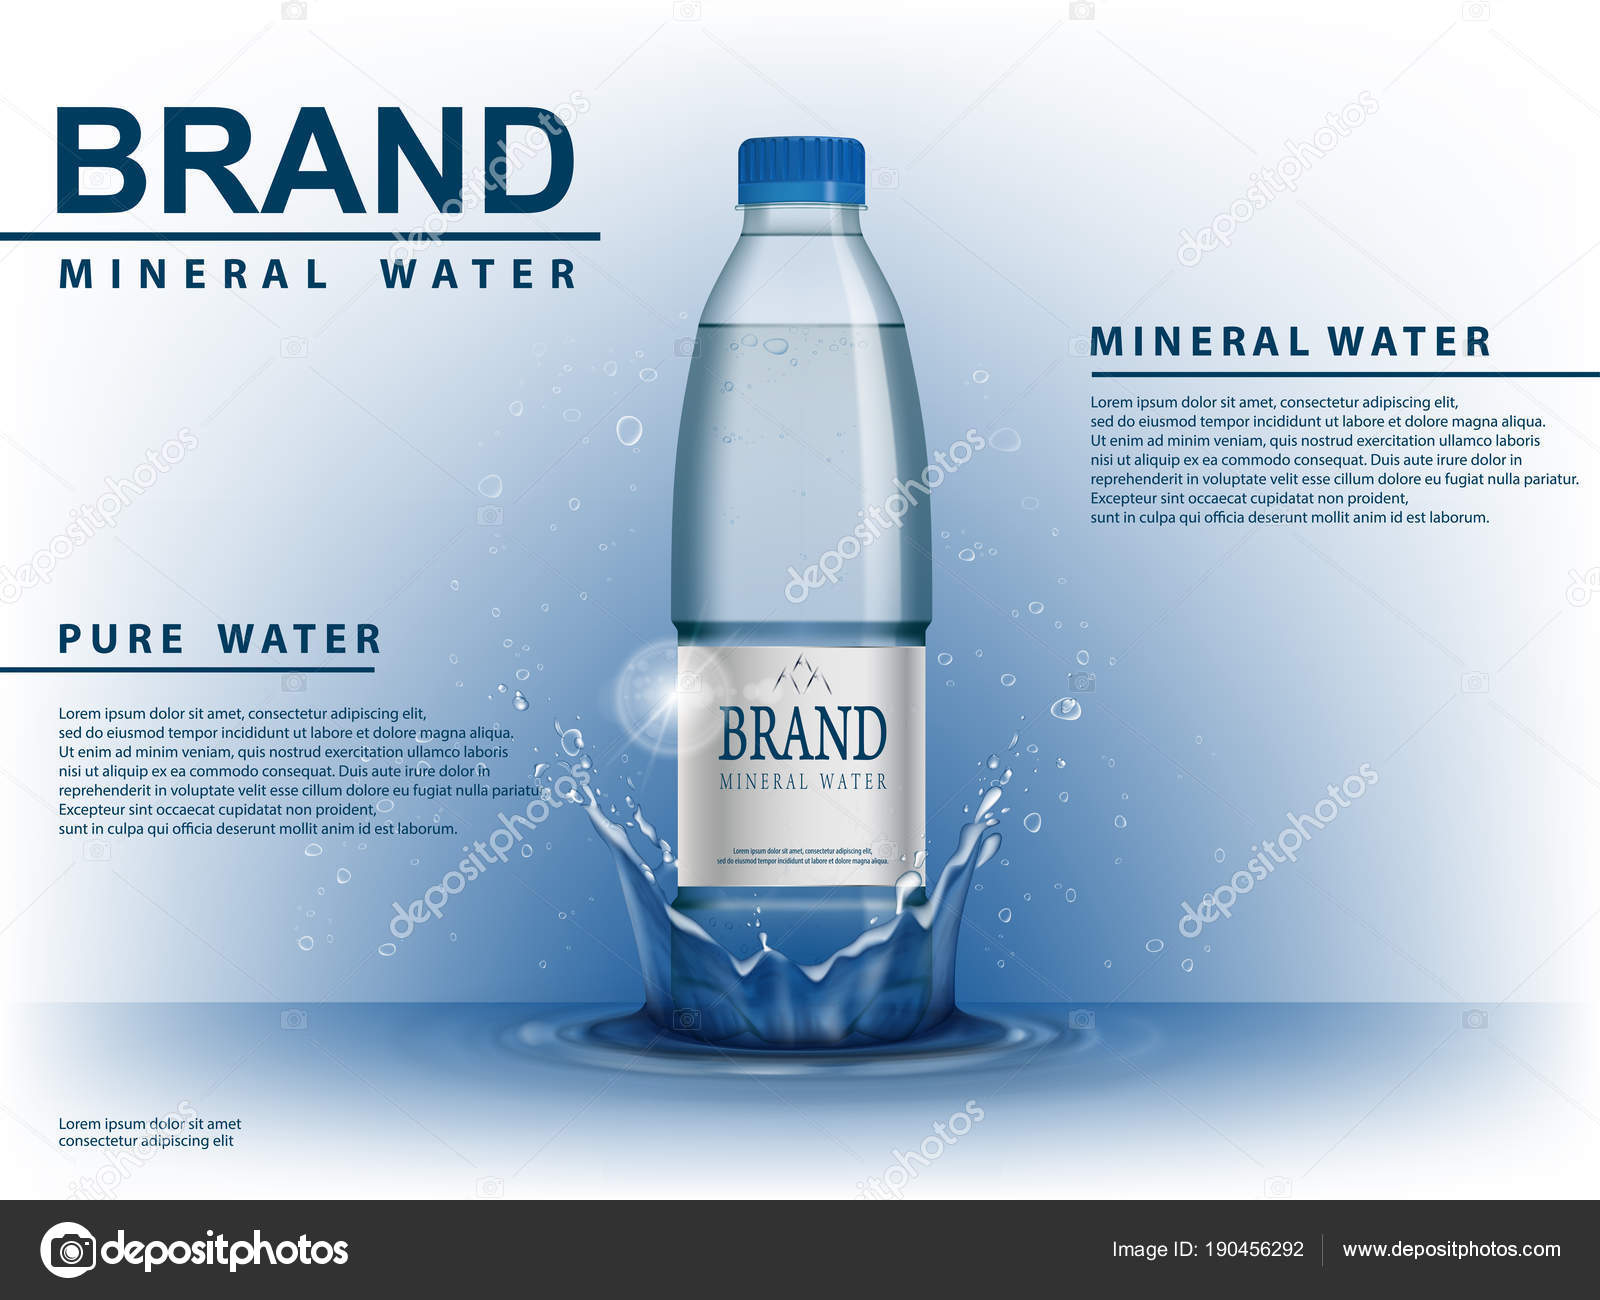 https://st3.depositphotos.com/5433682/19045/v/1600/depositphotos_190456292-stock-illustration-pure-mineral-water-ad-plastic.jpg